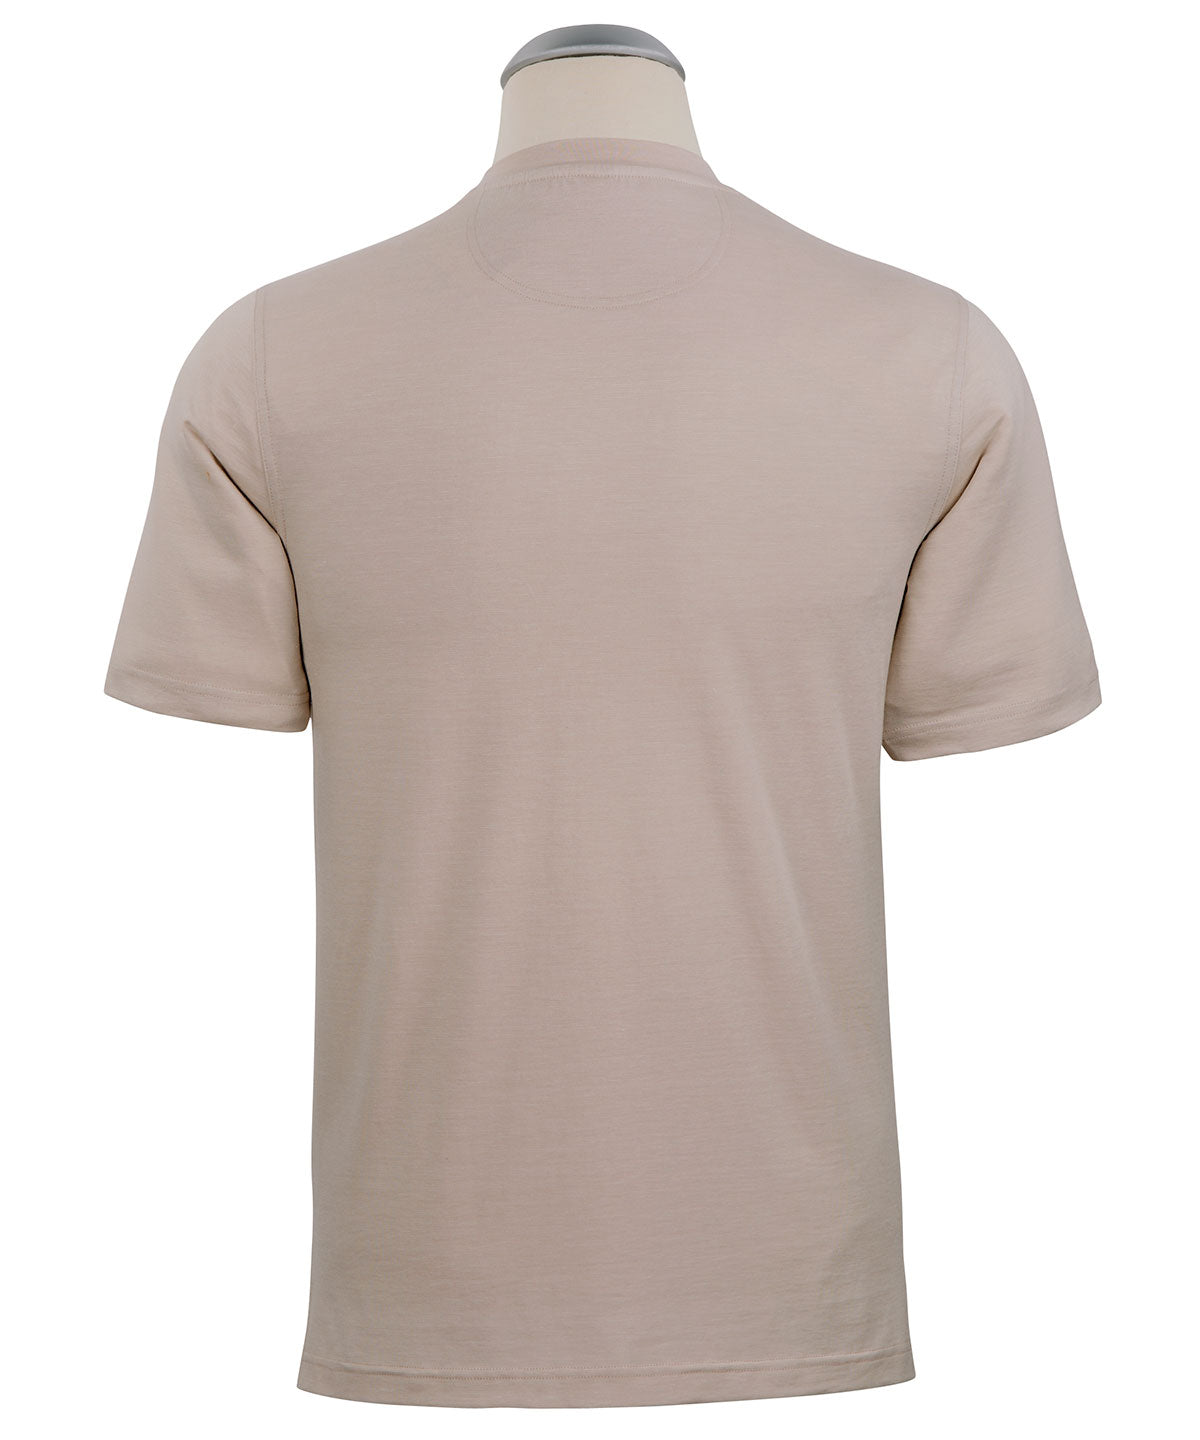 Liquid Stretch Cotton Short-Sleeve Tee Shirt